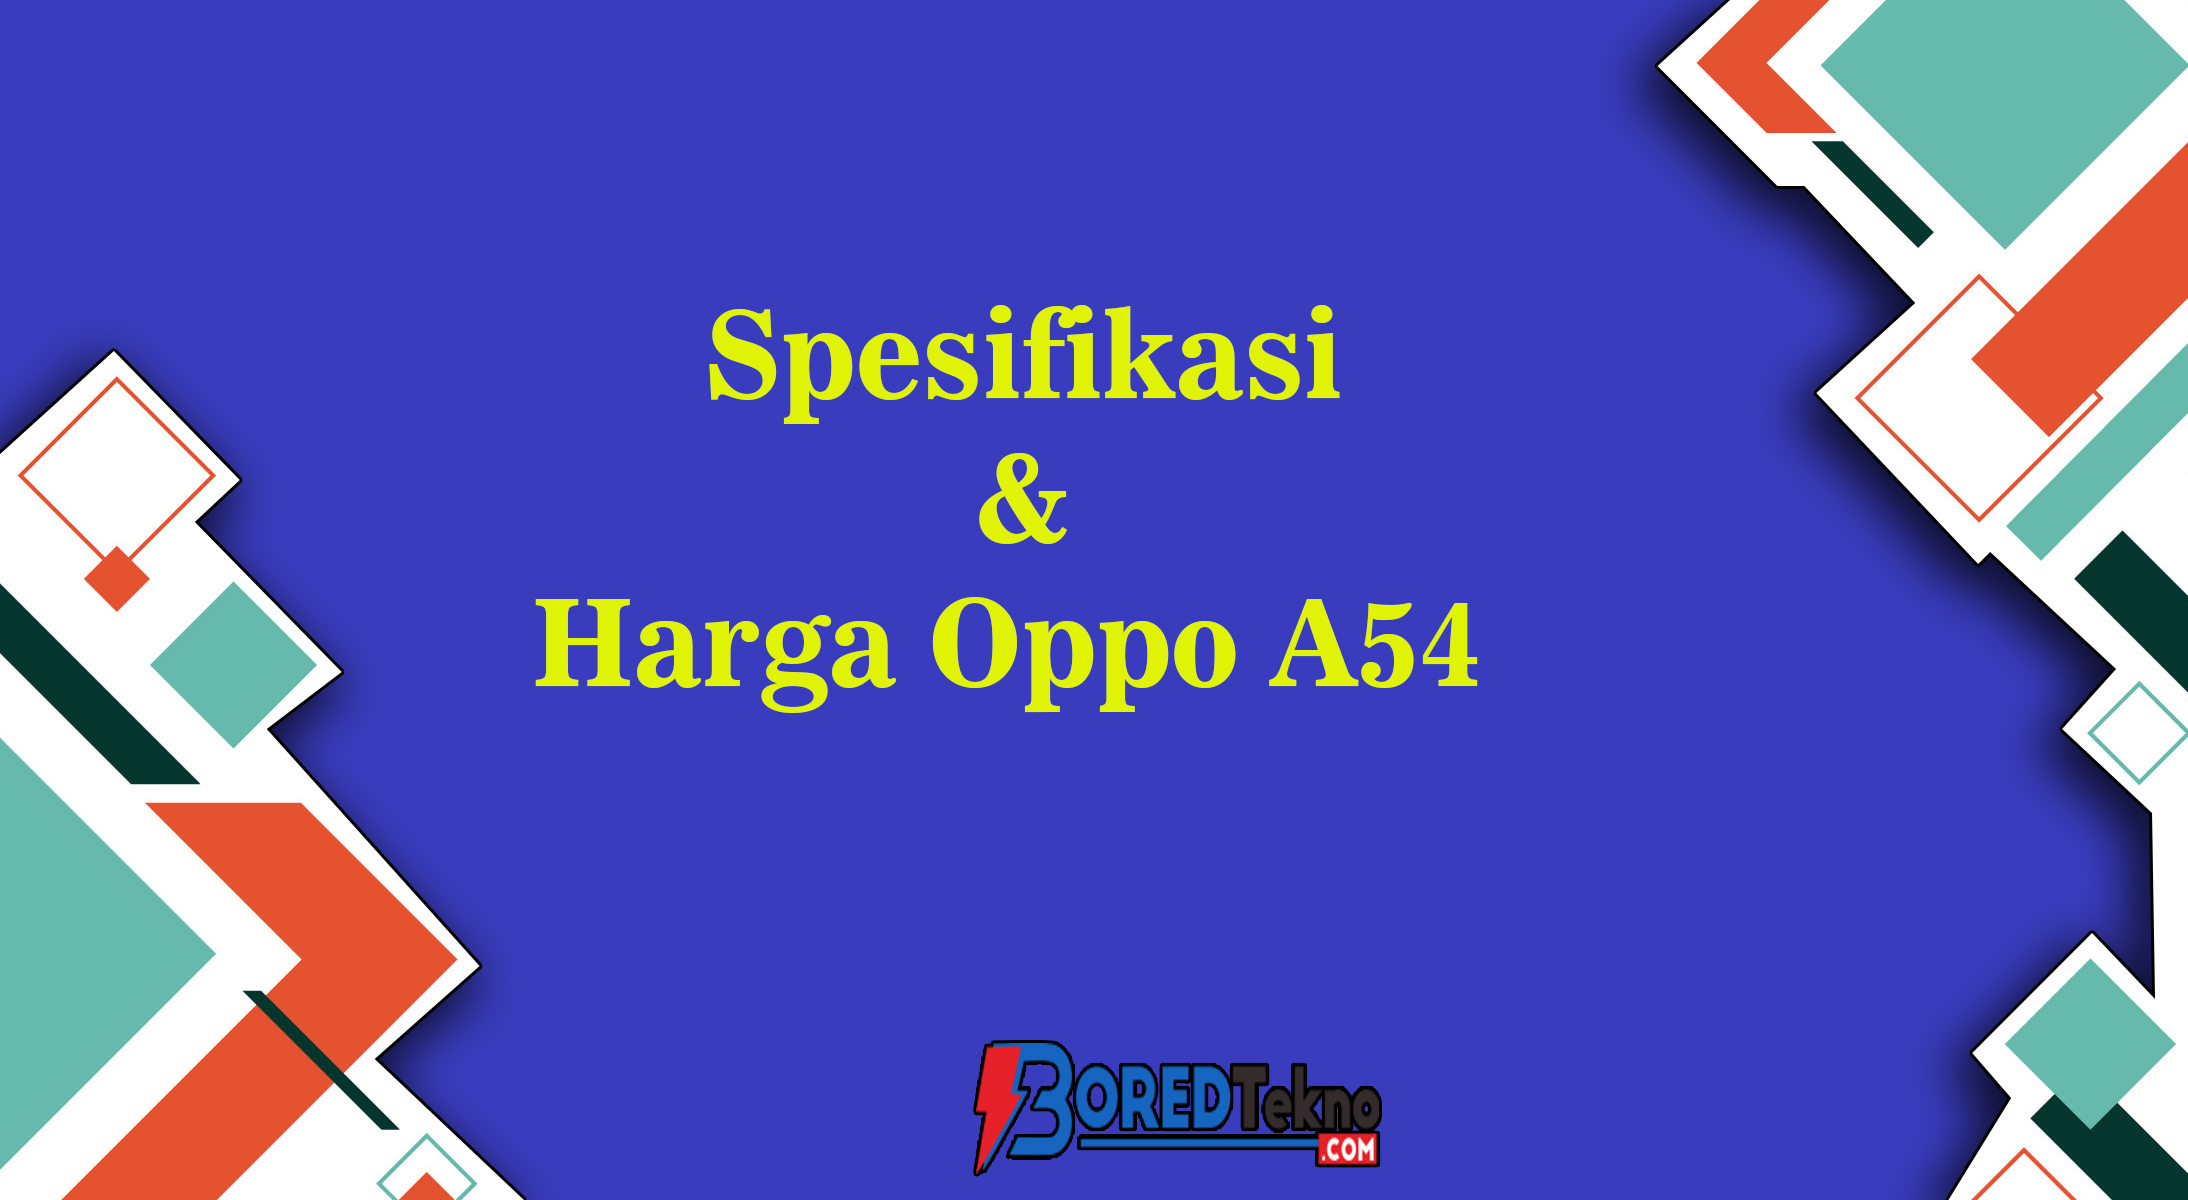 Spesifikasi & Harga Oppo A54